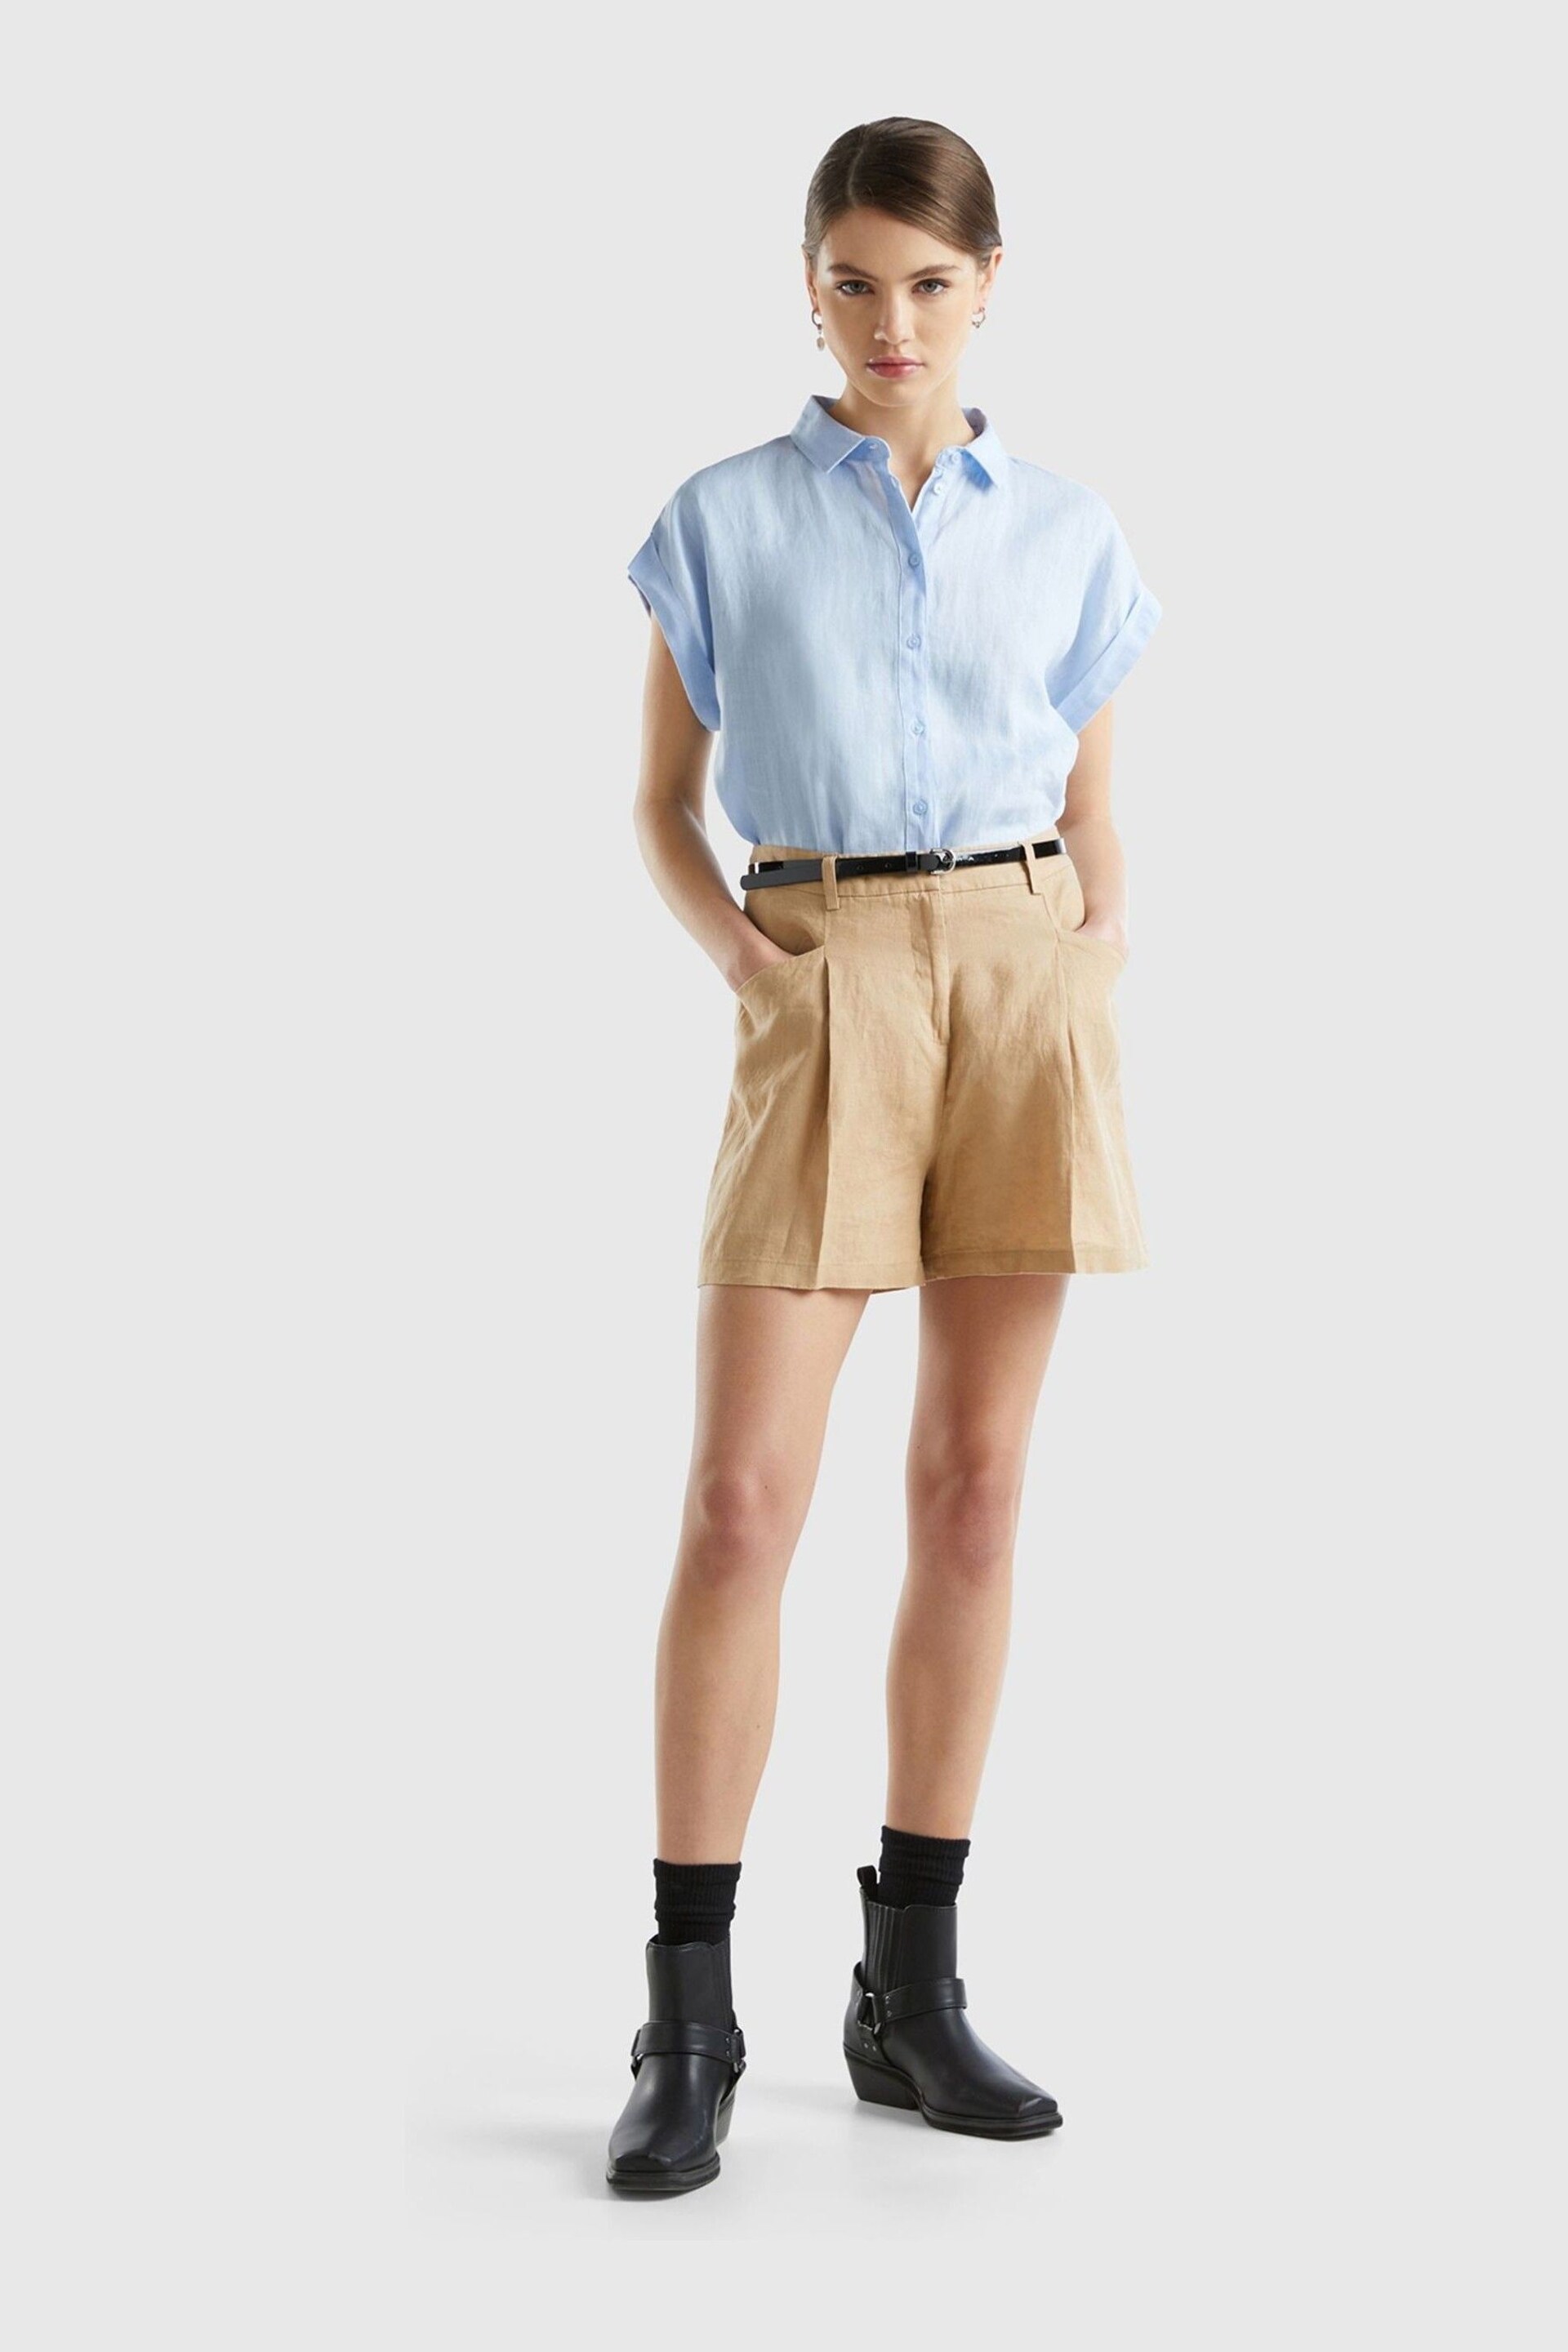 Benetton Linen Shorts - Image 3 of 4